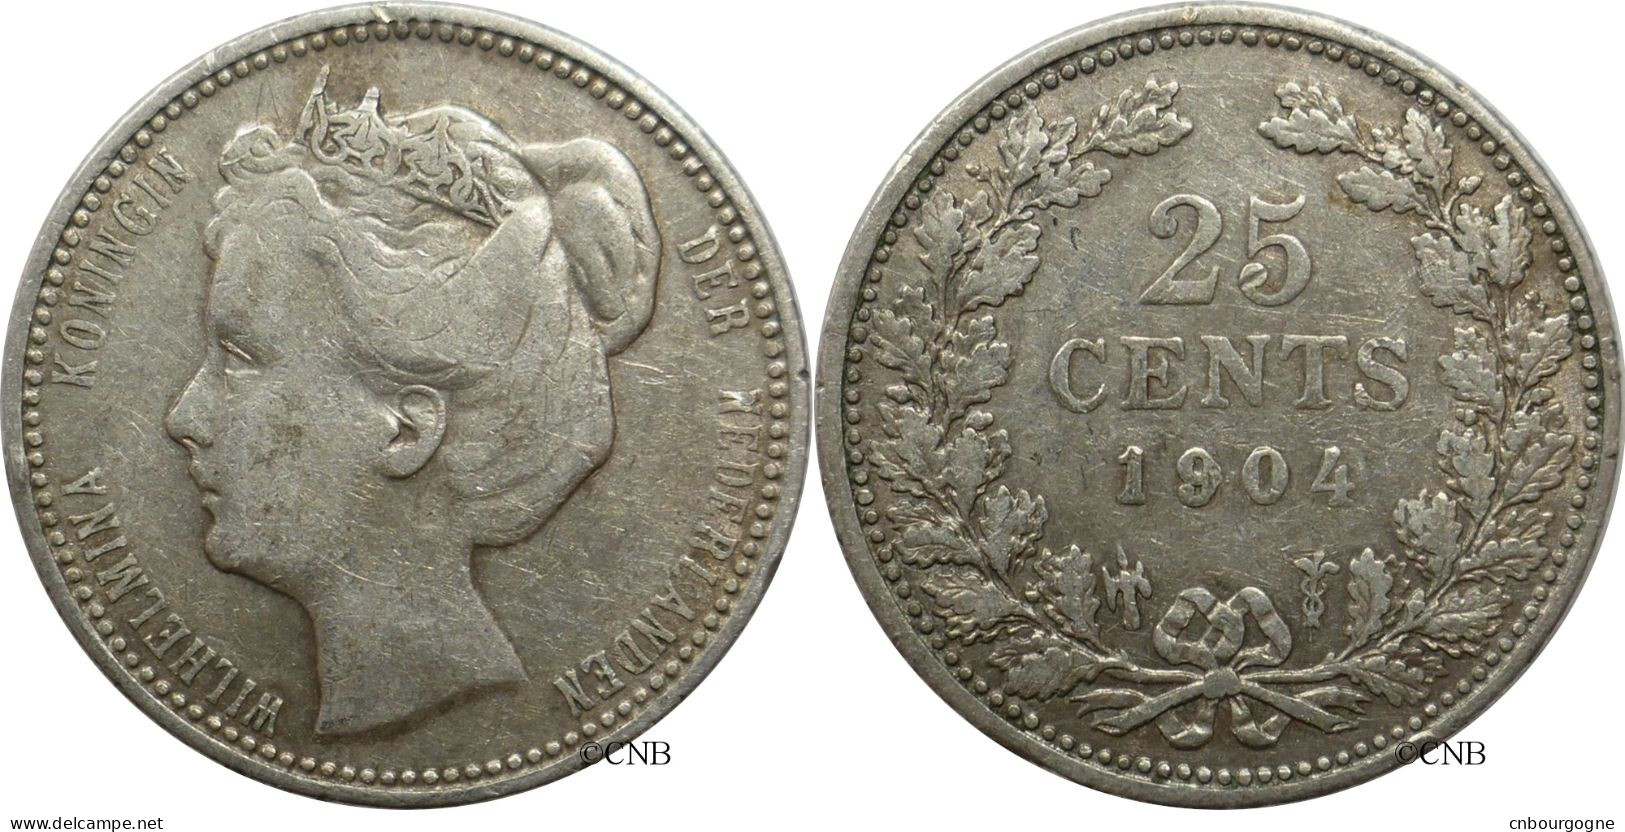 Pays-Bas - Royaume - Wilhelmina - 25 Cents 1904 - TB+/VF35 - Mon5839 - 25 Cent